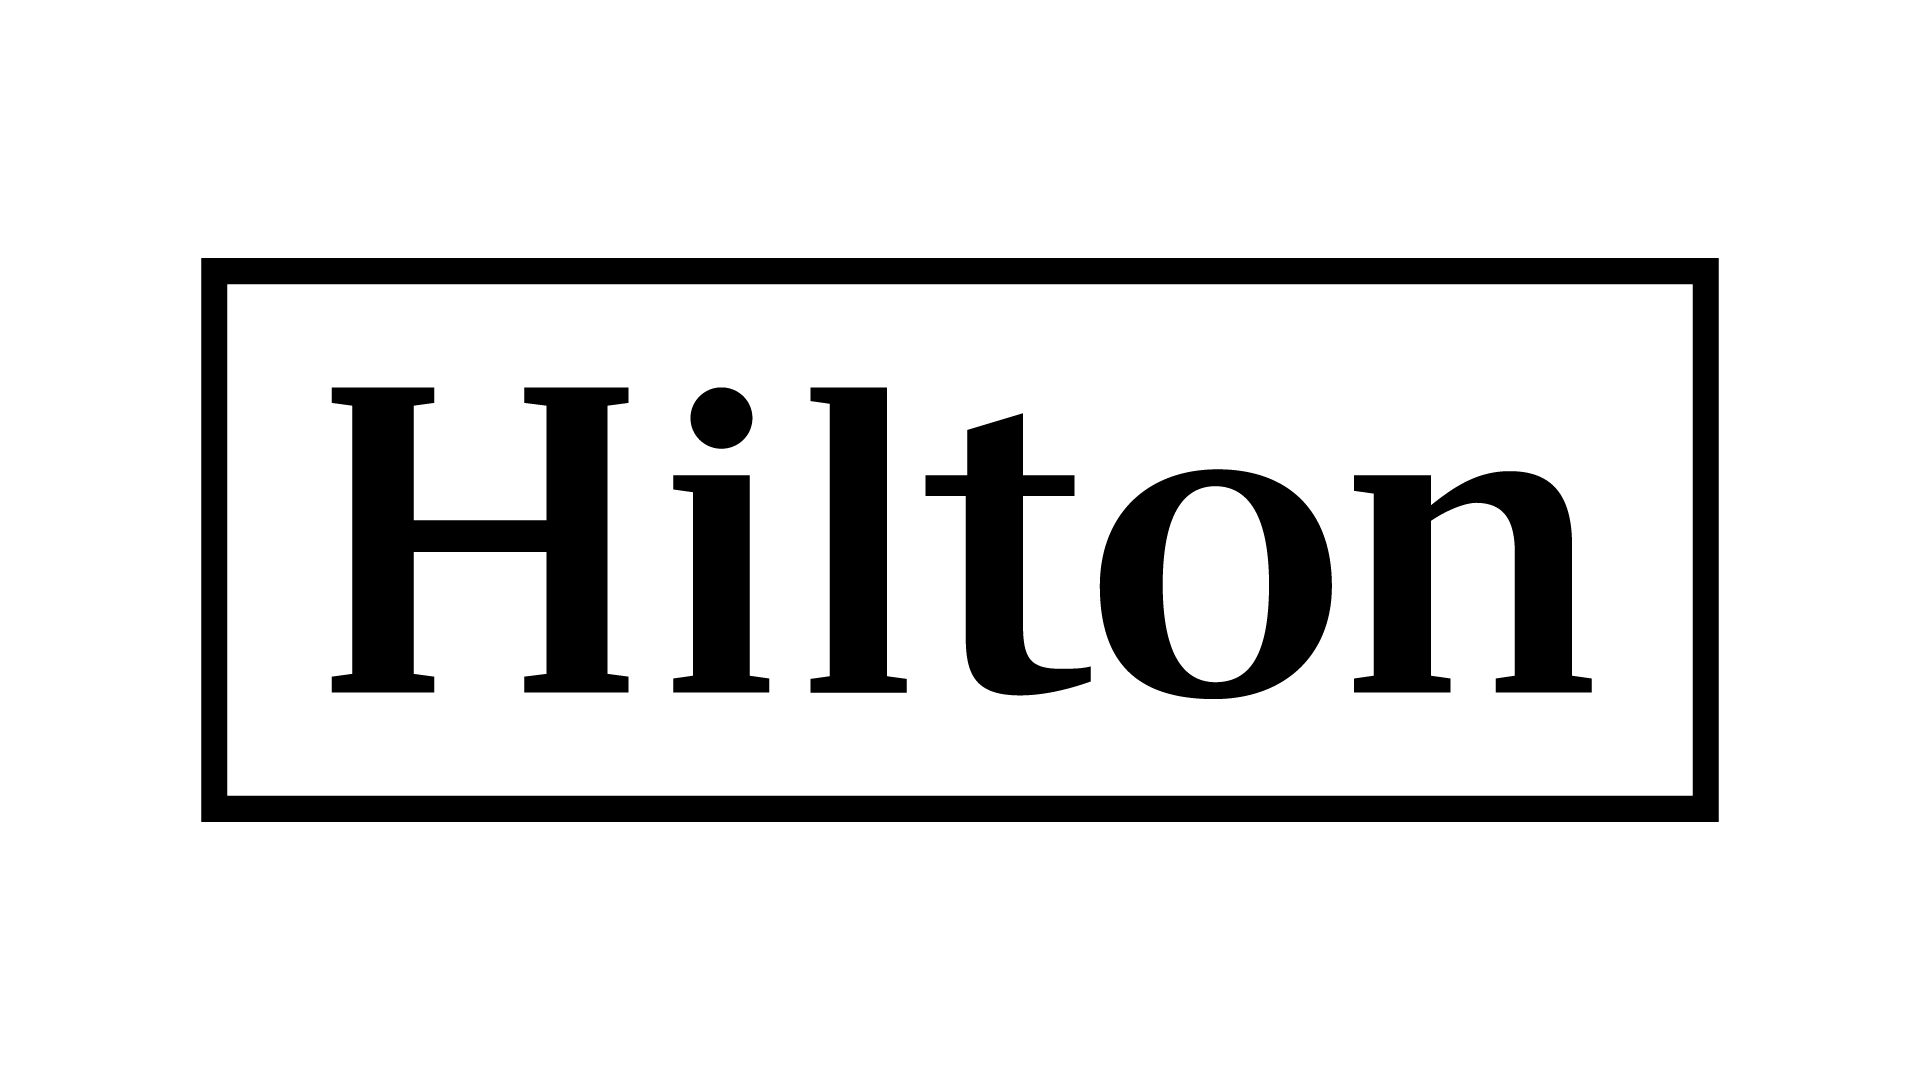 Logo for Hilton